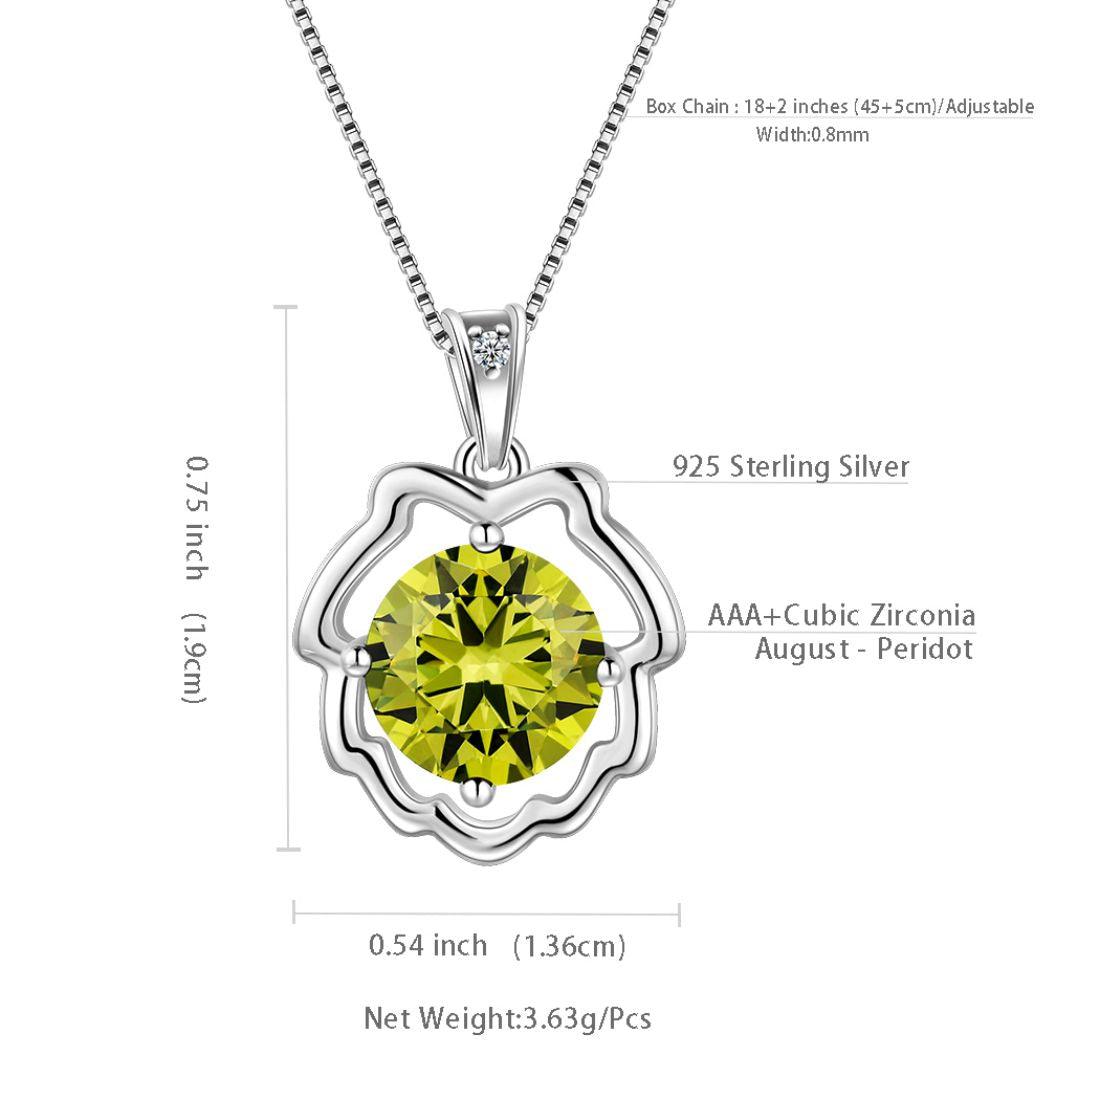 Leo Necklace Zodiac August Birthstone Pendant Crystal - Necklaces - Aurora Tears